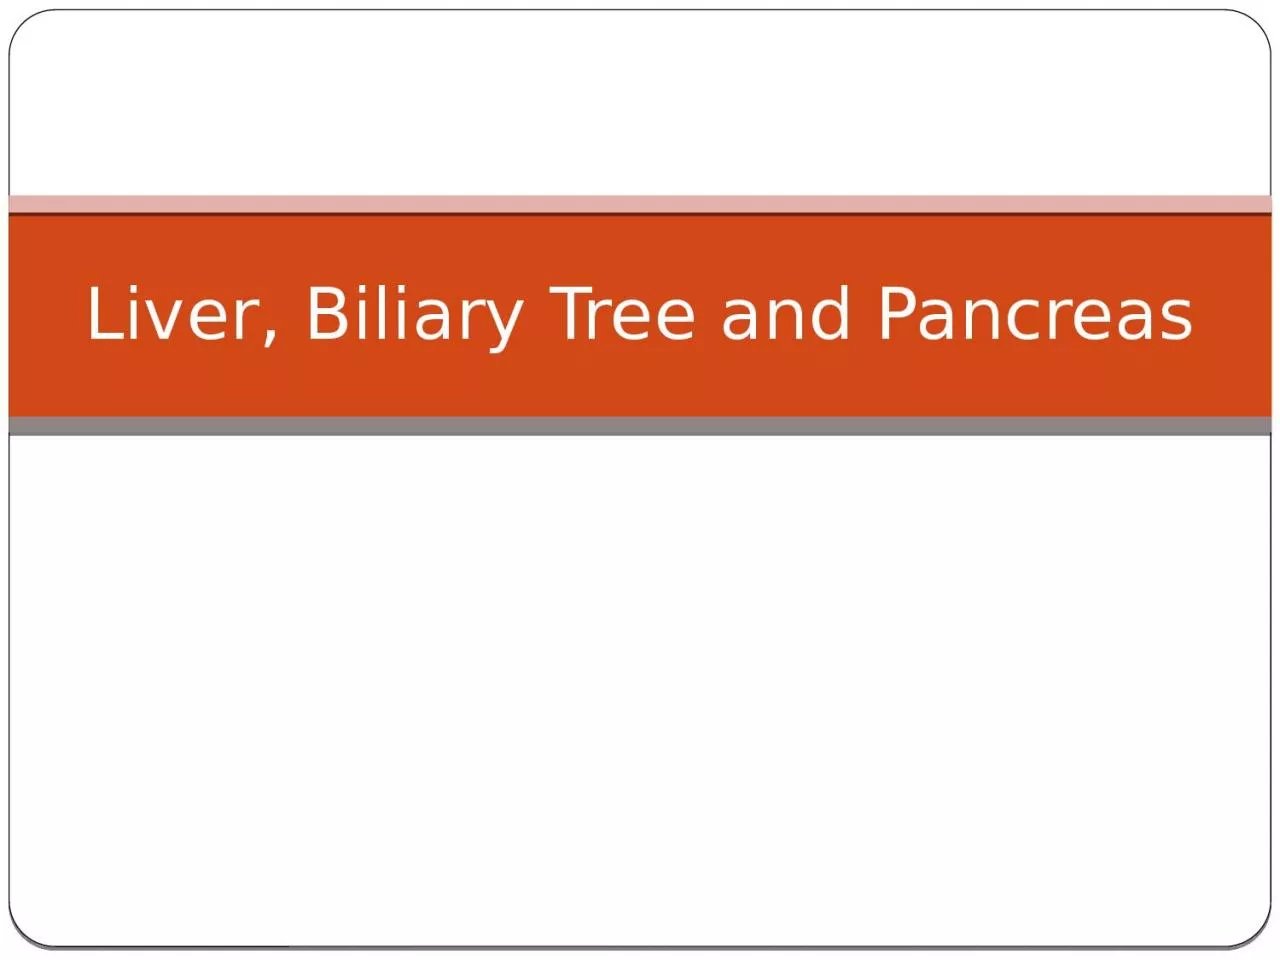 Liver, Biliary Tree and Pancreas